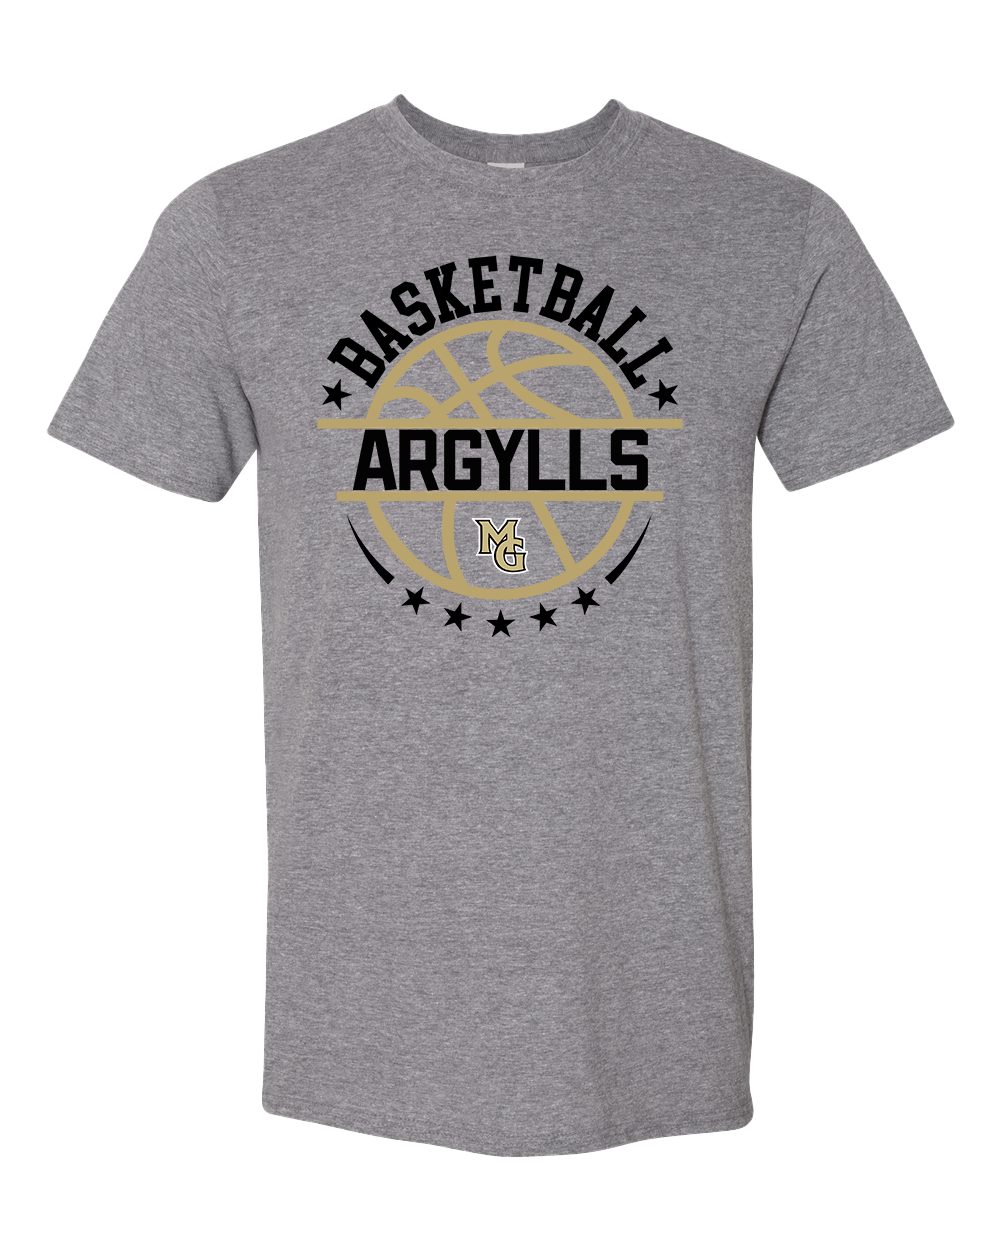 MG Argylls Basketball Tshirt - Graphite Heather